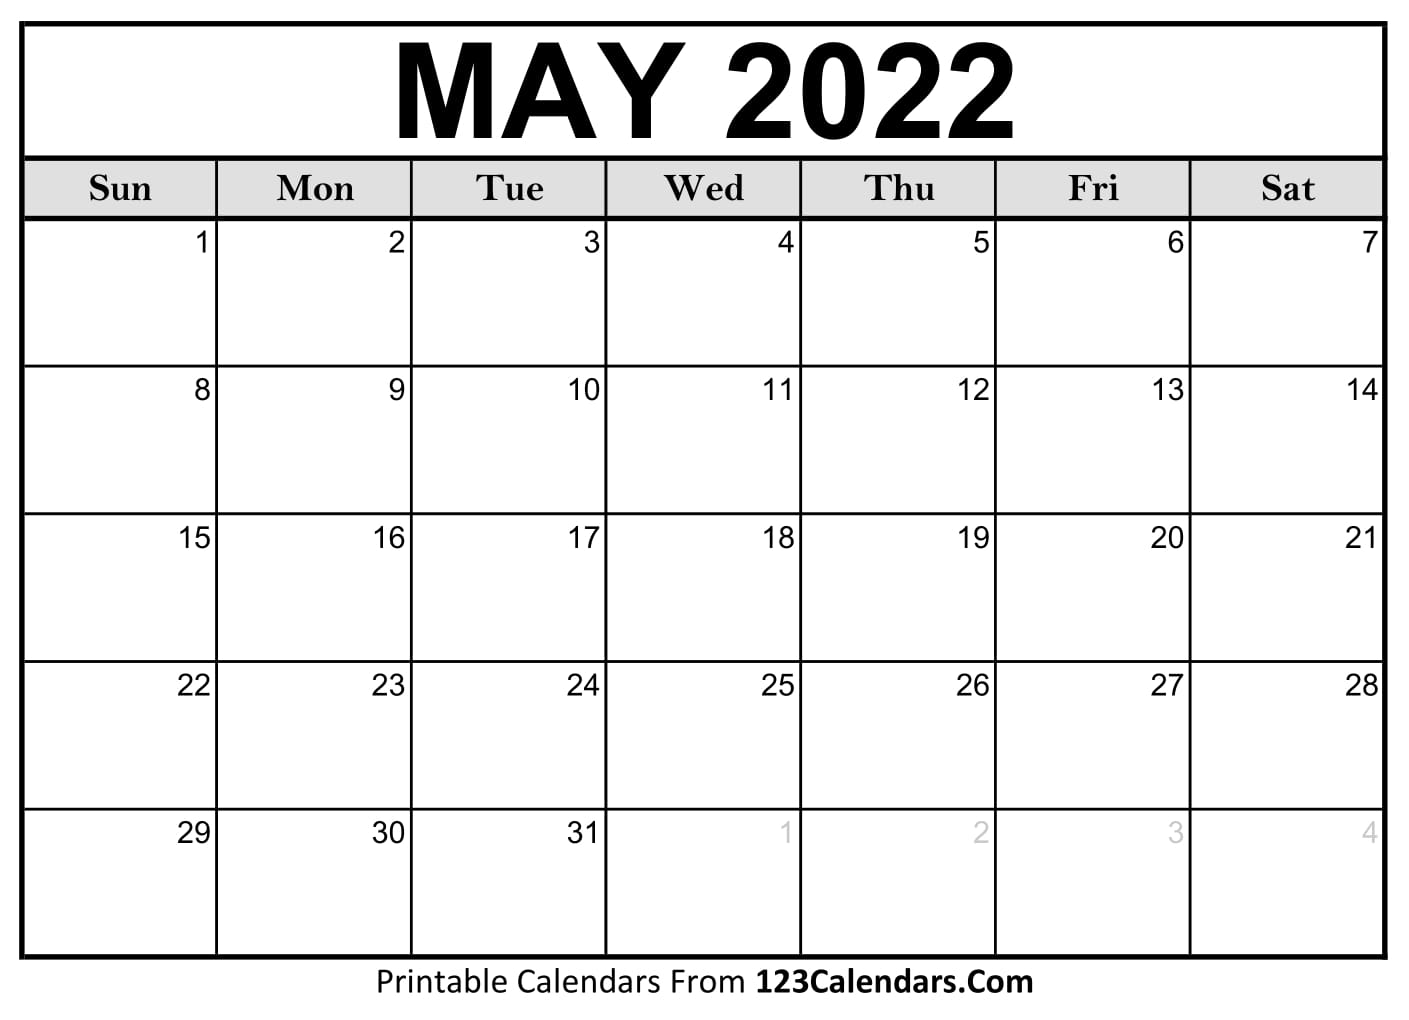 Month Of May Calendar 2022 Printable May 2022 Calendar Templates - 123Calendars.com